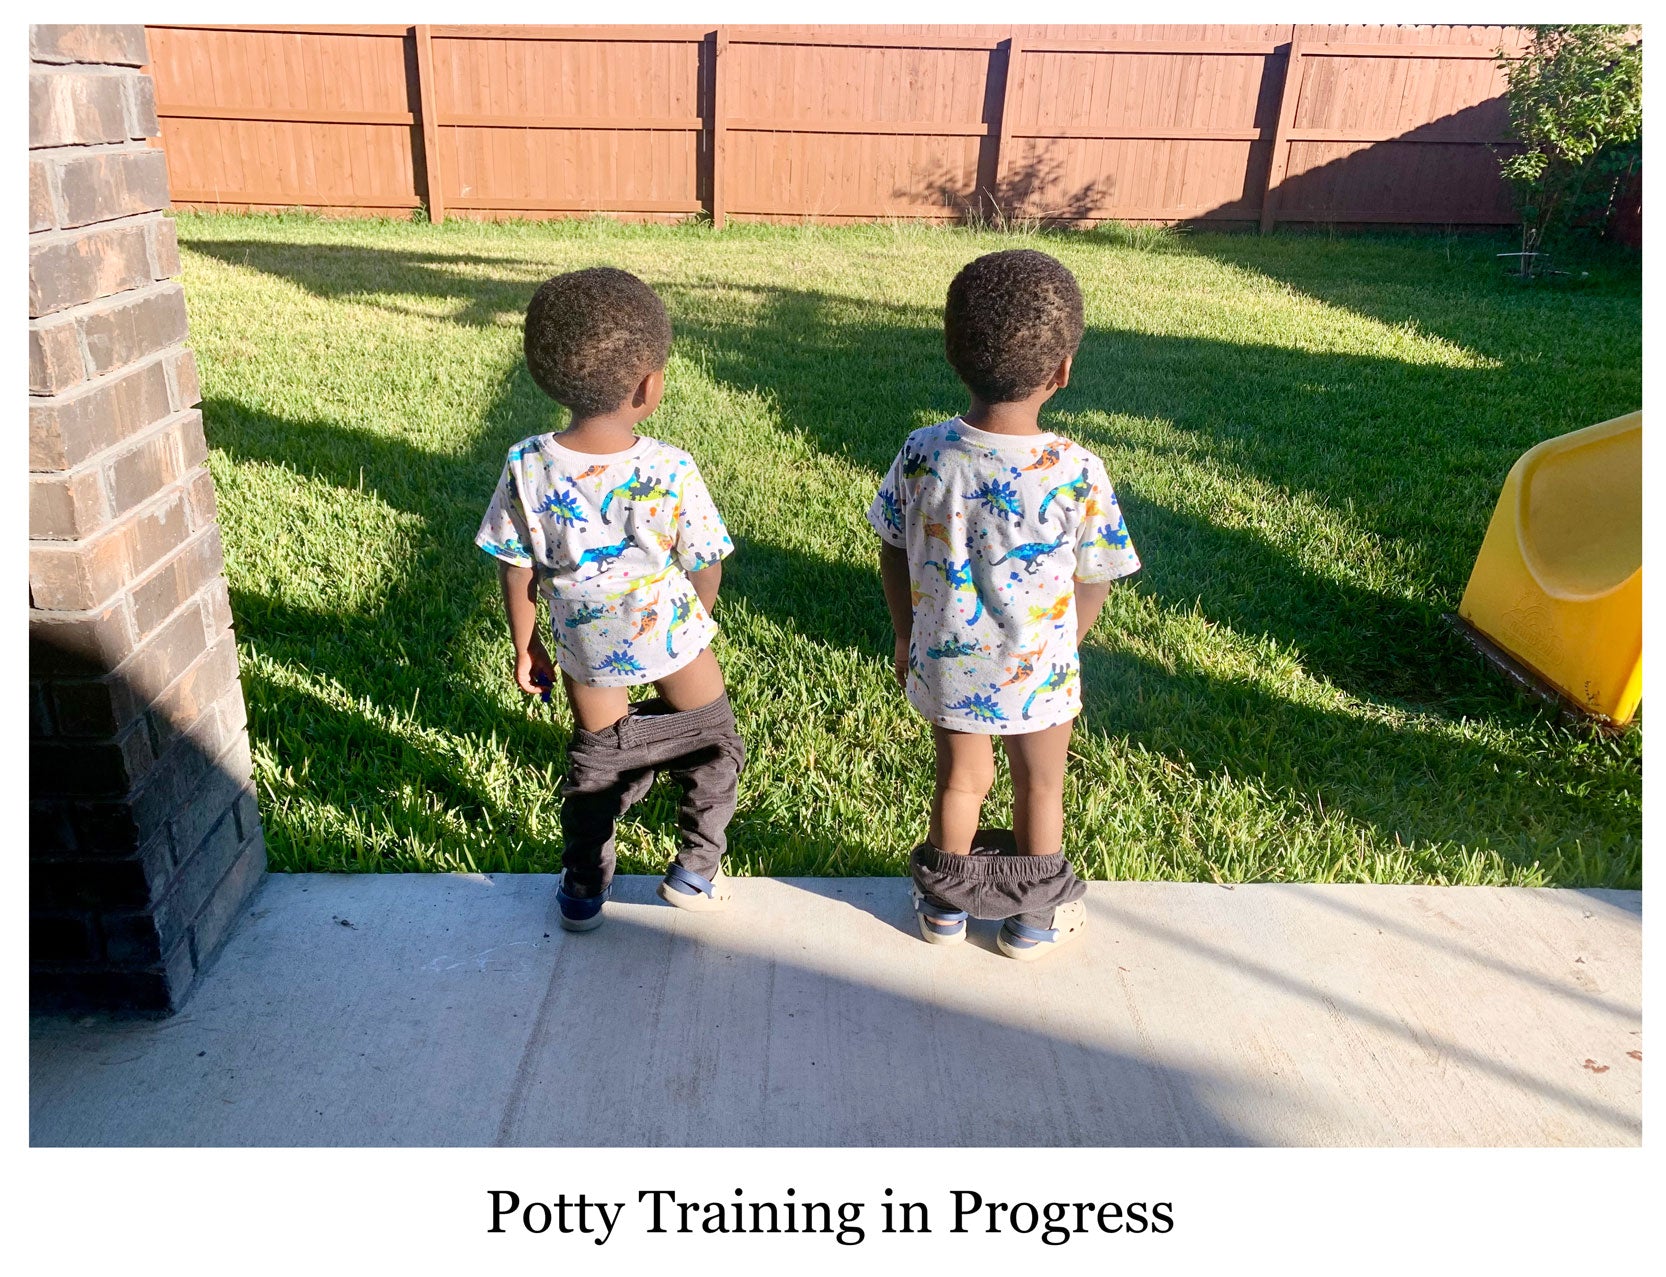 Tips on Potty Training Boys - Faniks Baby